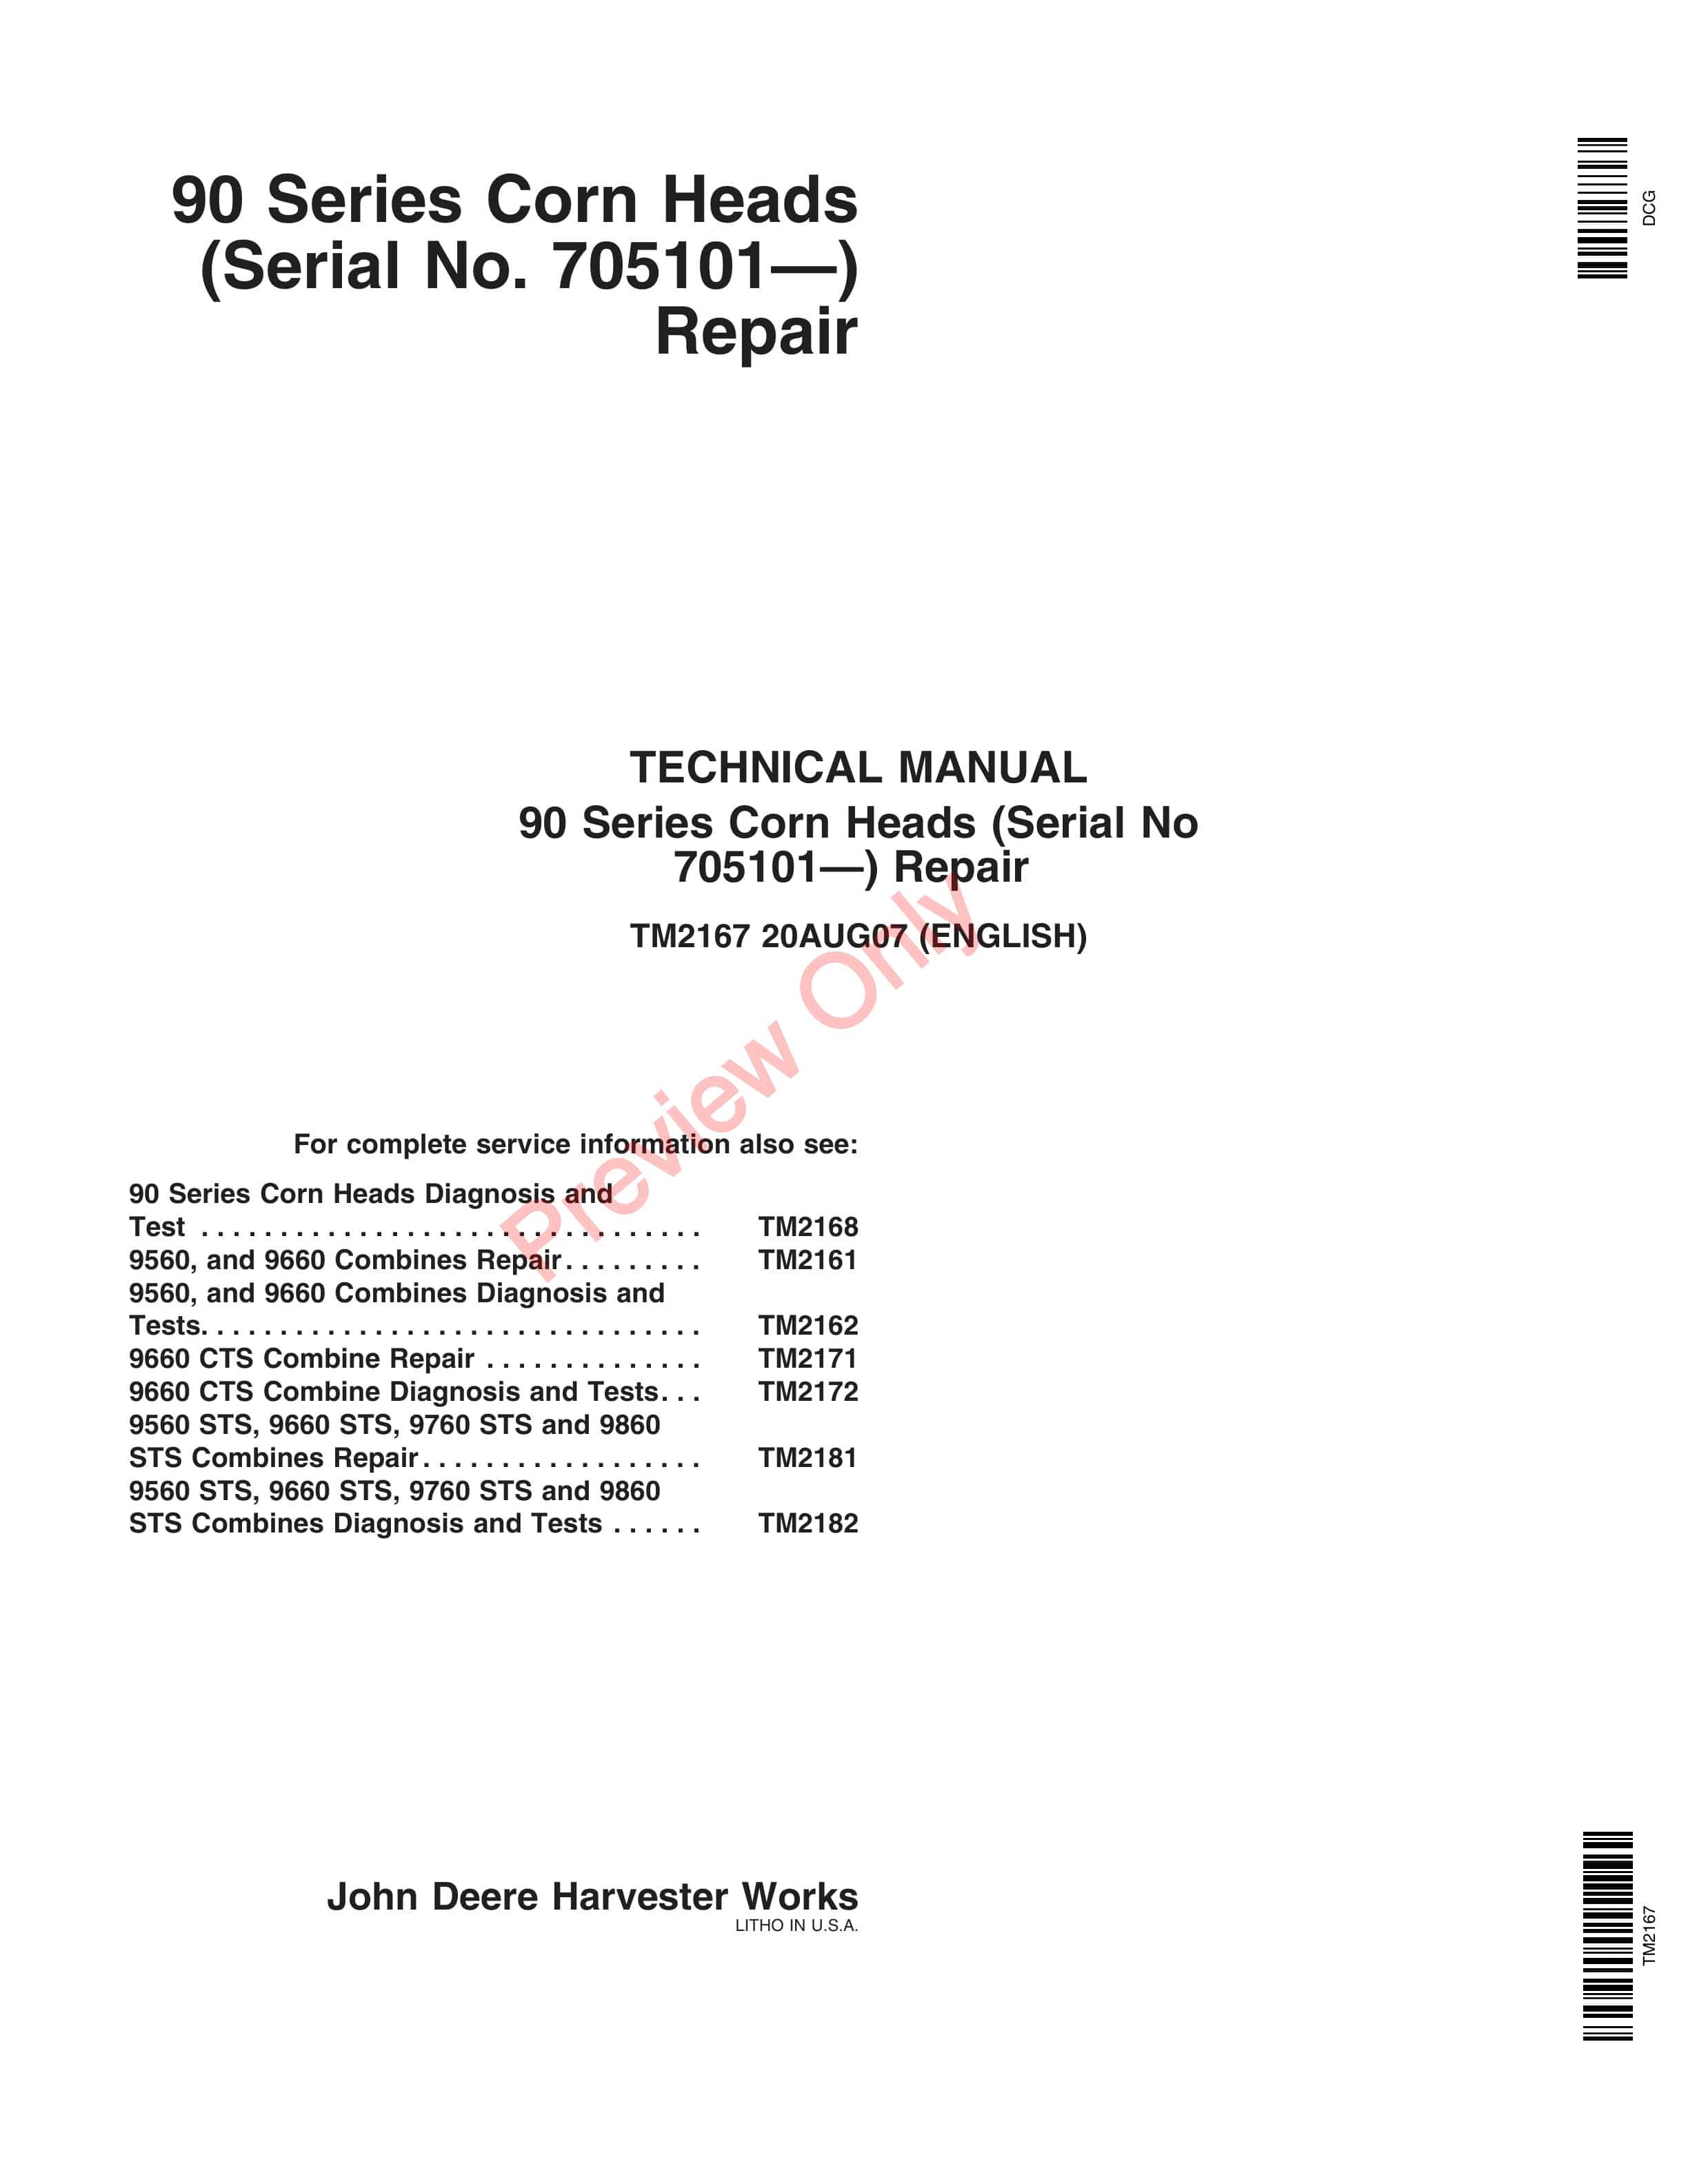 John Deere 90 Series Corn Heads 705101 Technical Manual TM2167 20AUG07 1